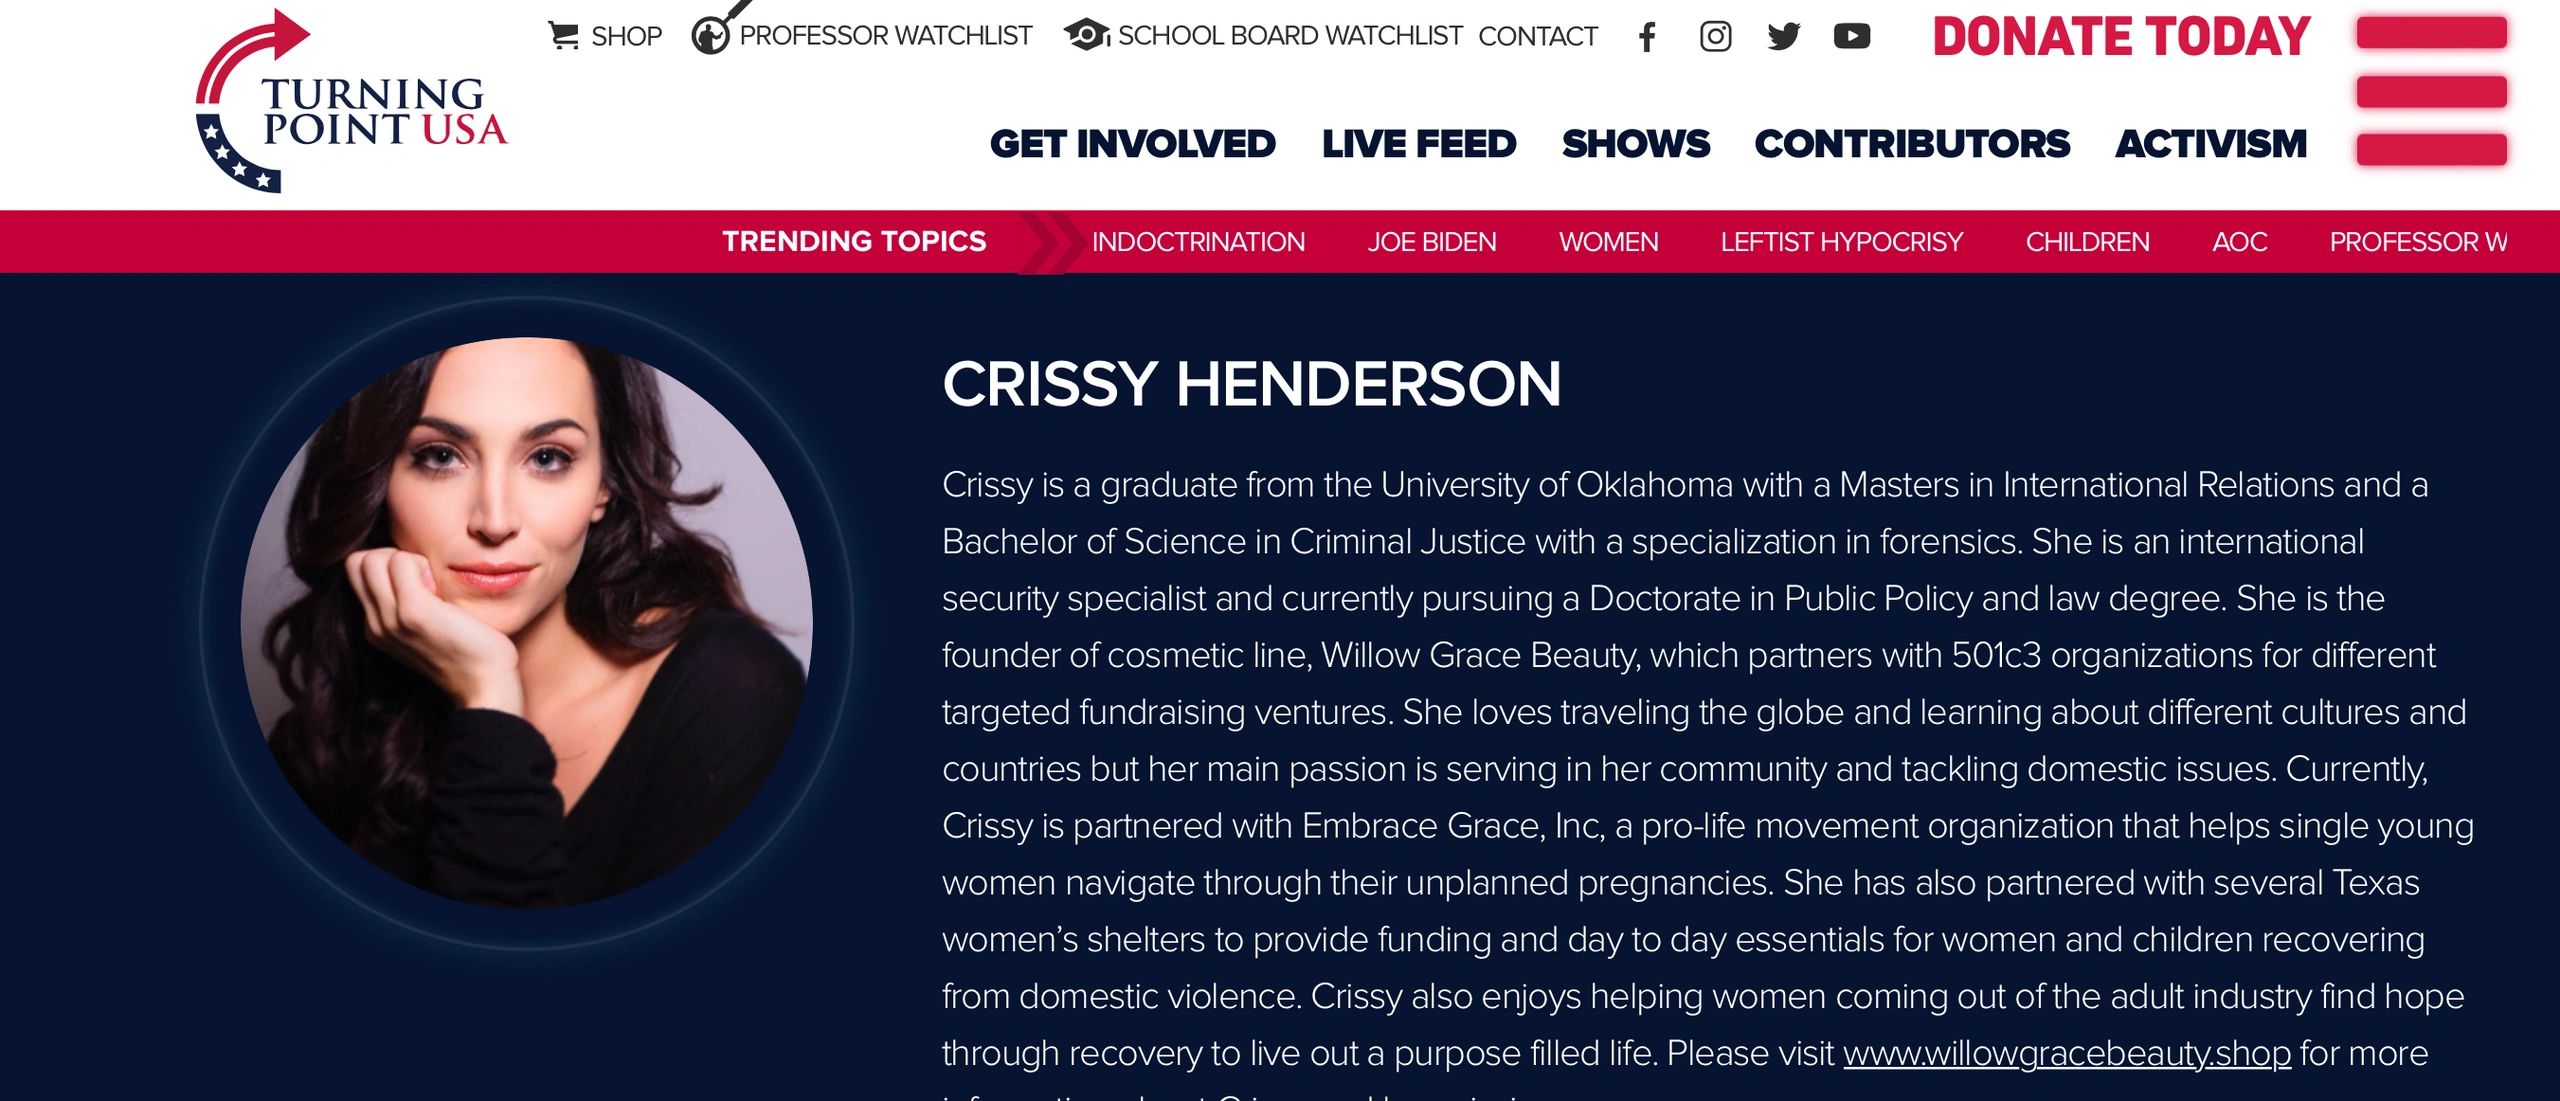 Chrissy Henderson